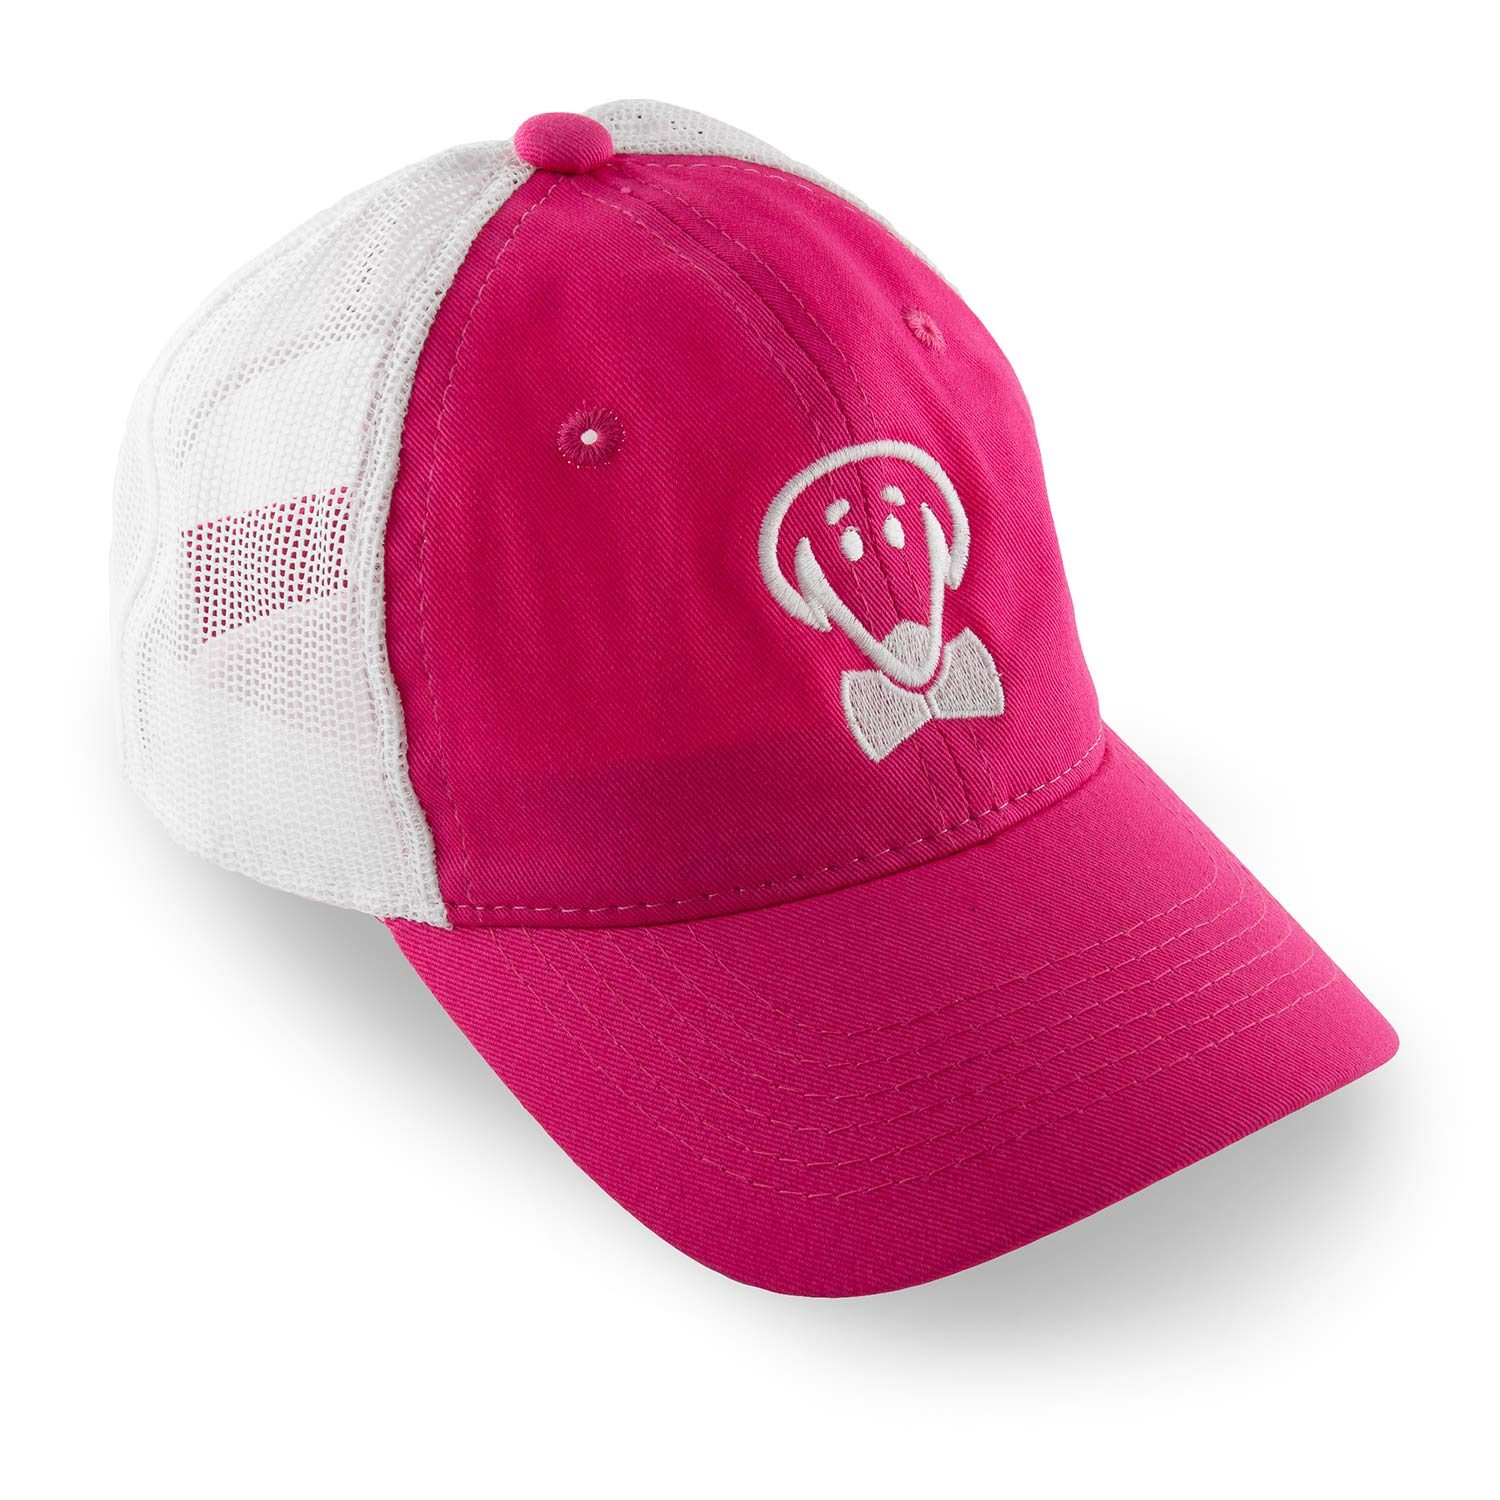 Tuscadero pink and white mesh baseball hat by Beau Tyler